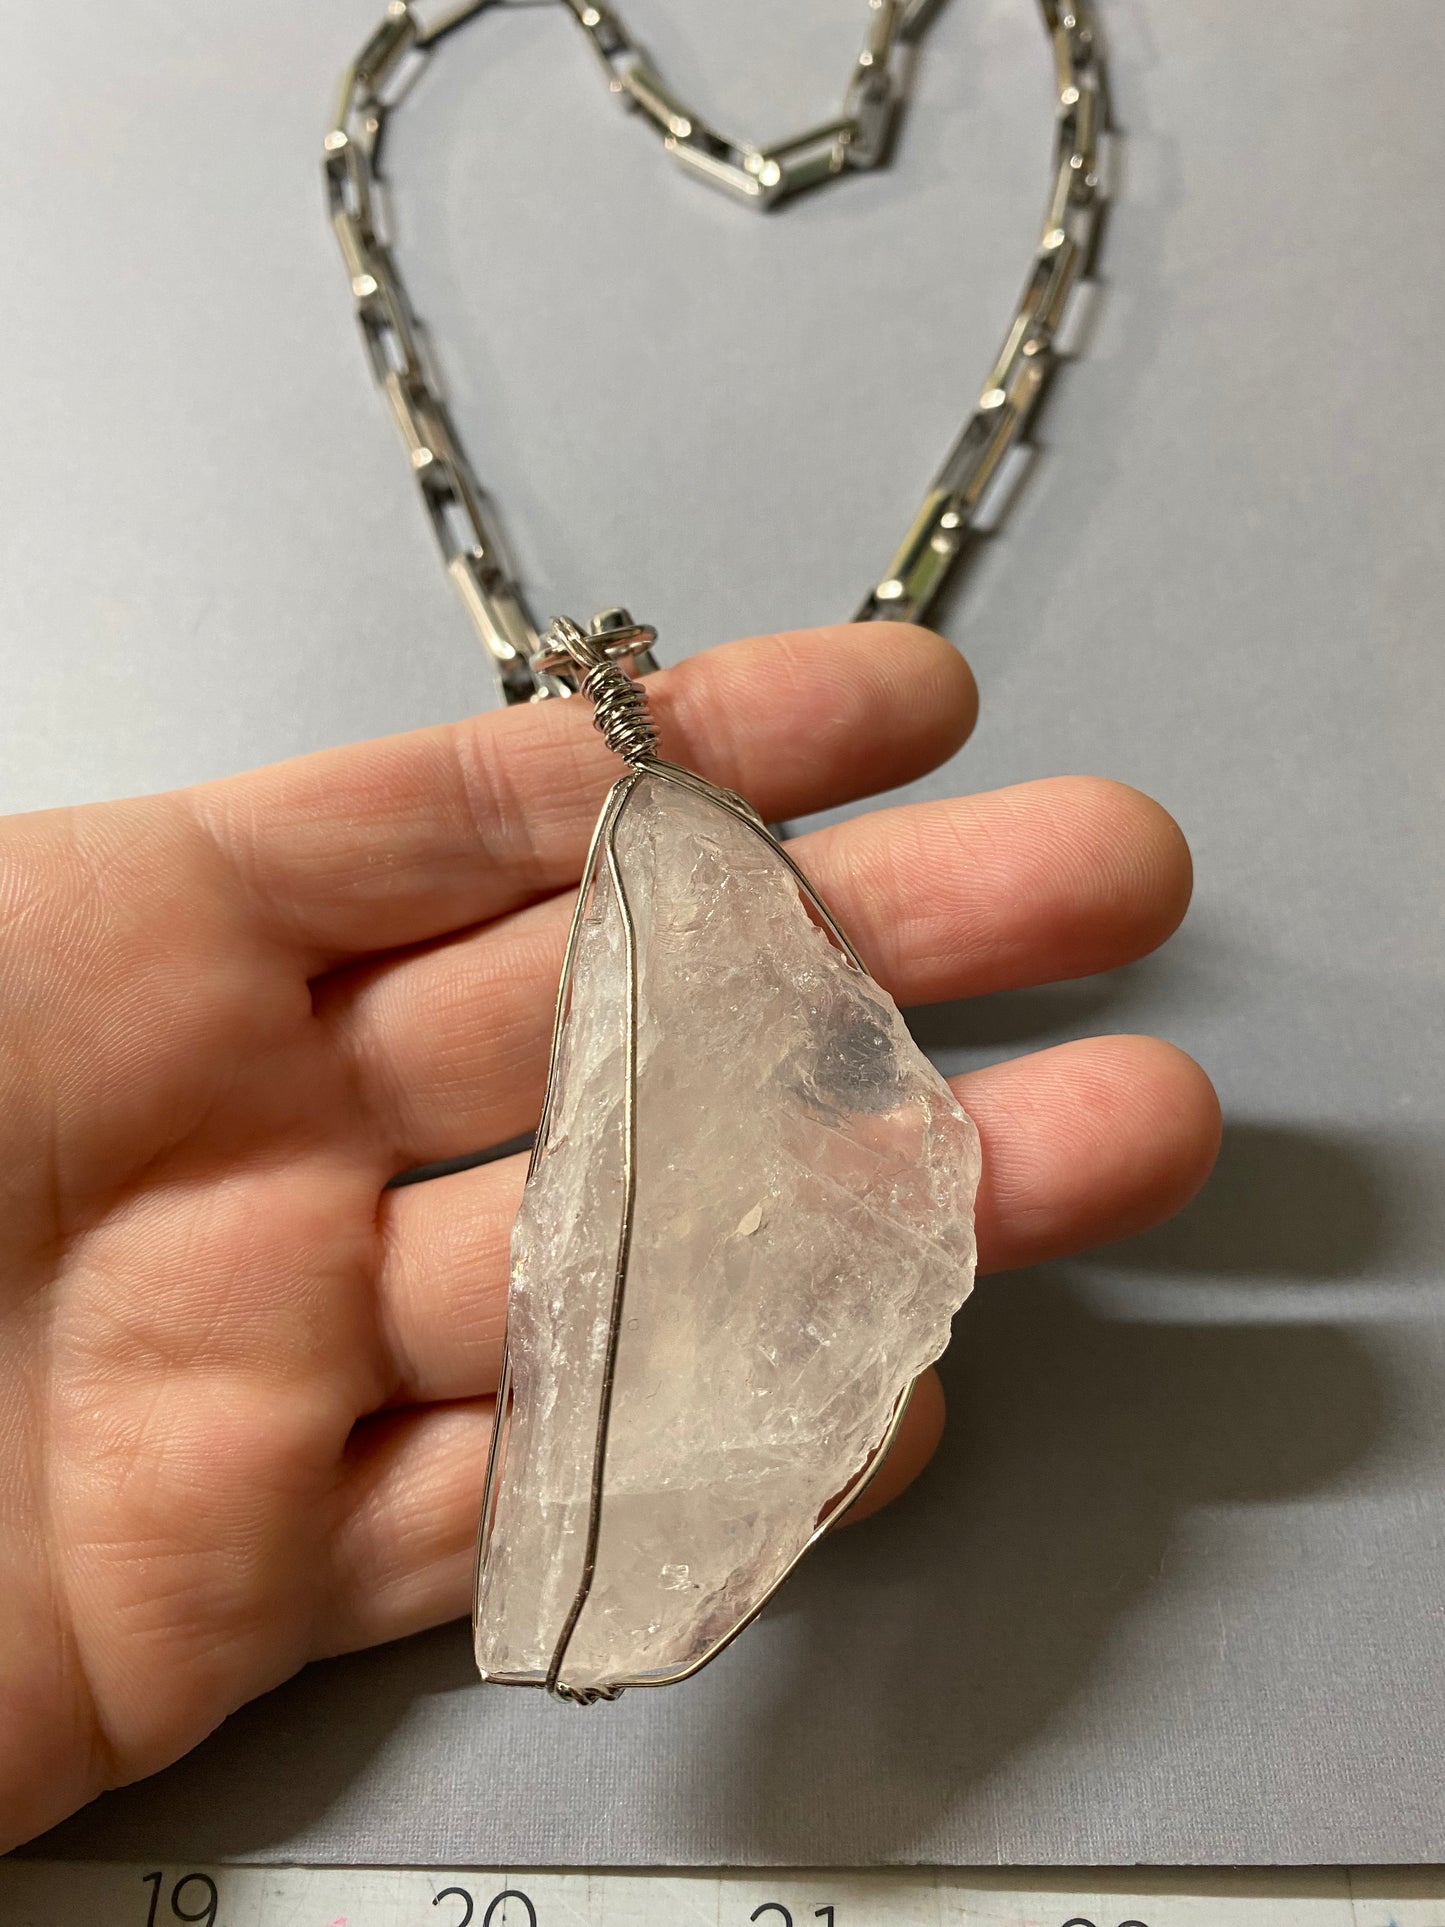 Jumbo quartz crystal necklace